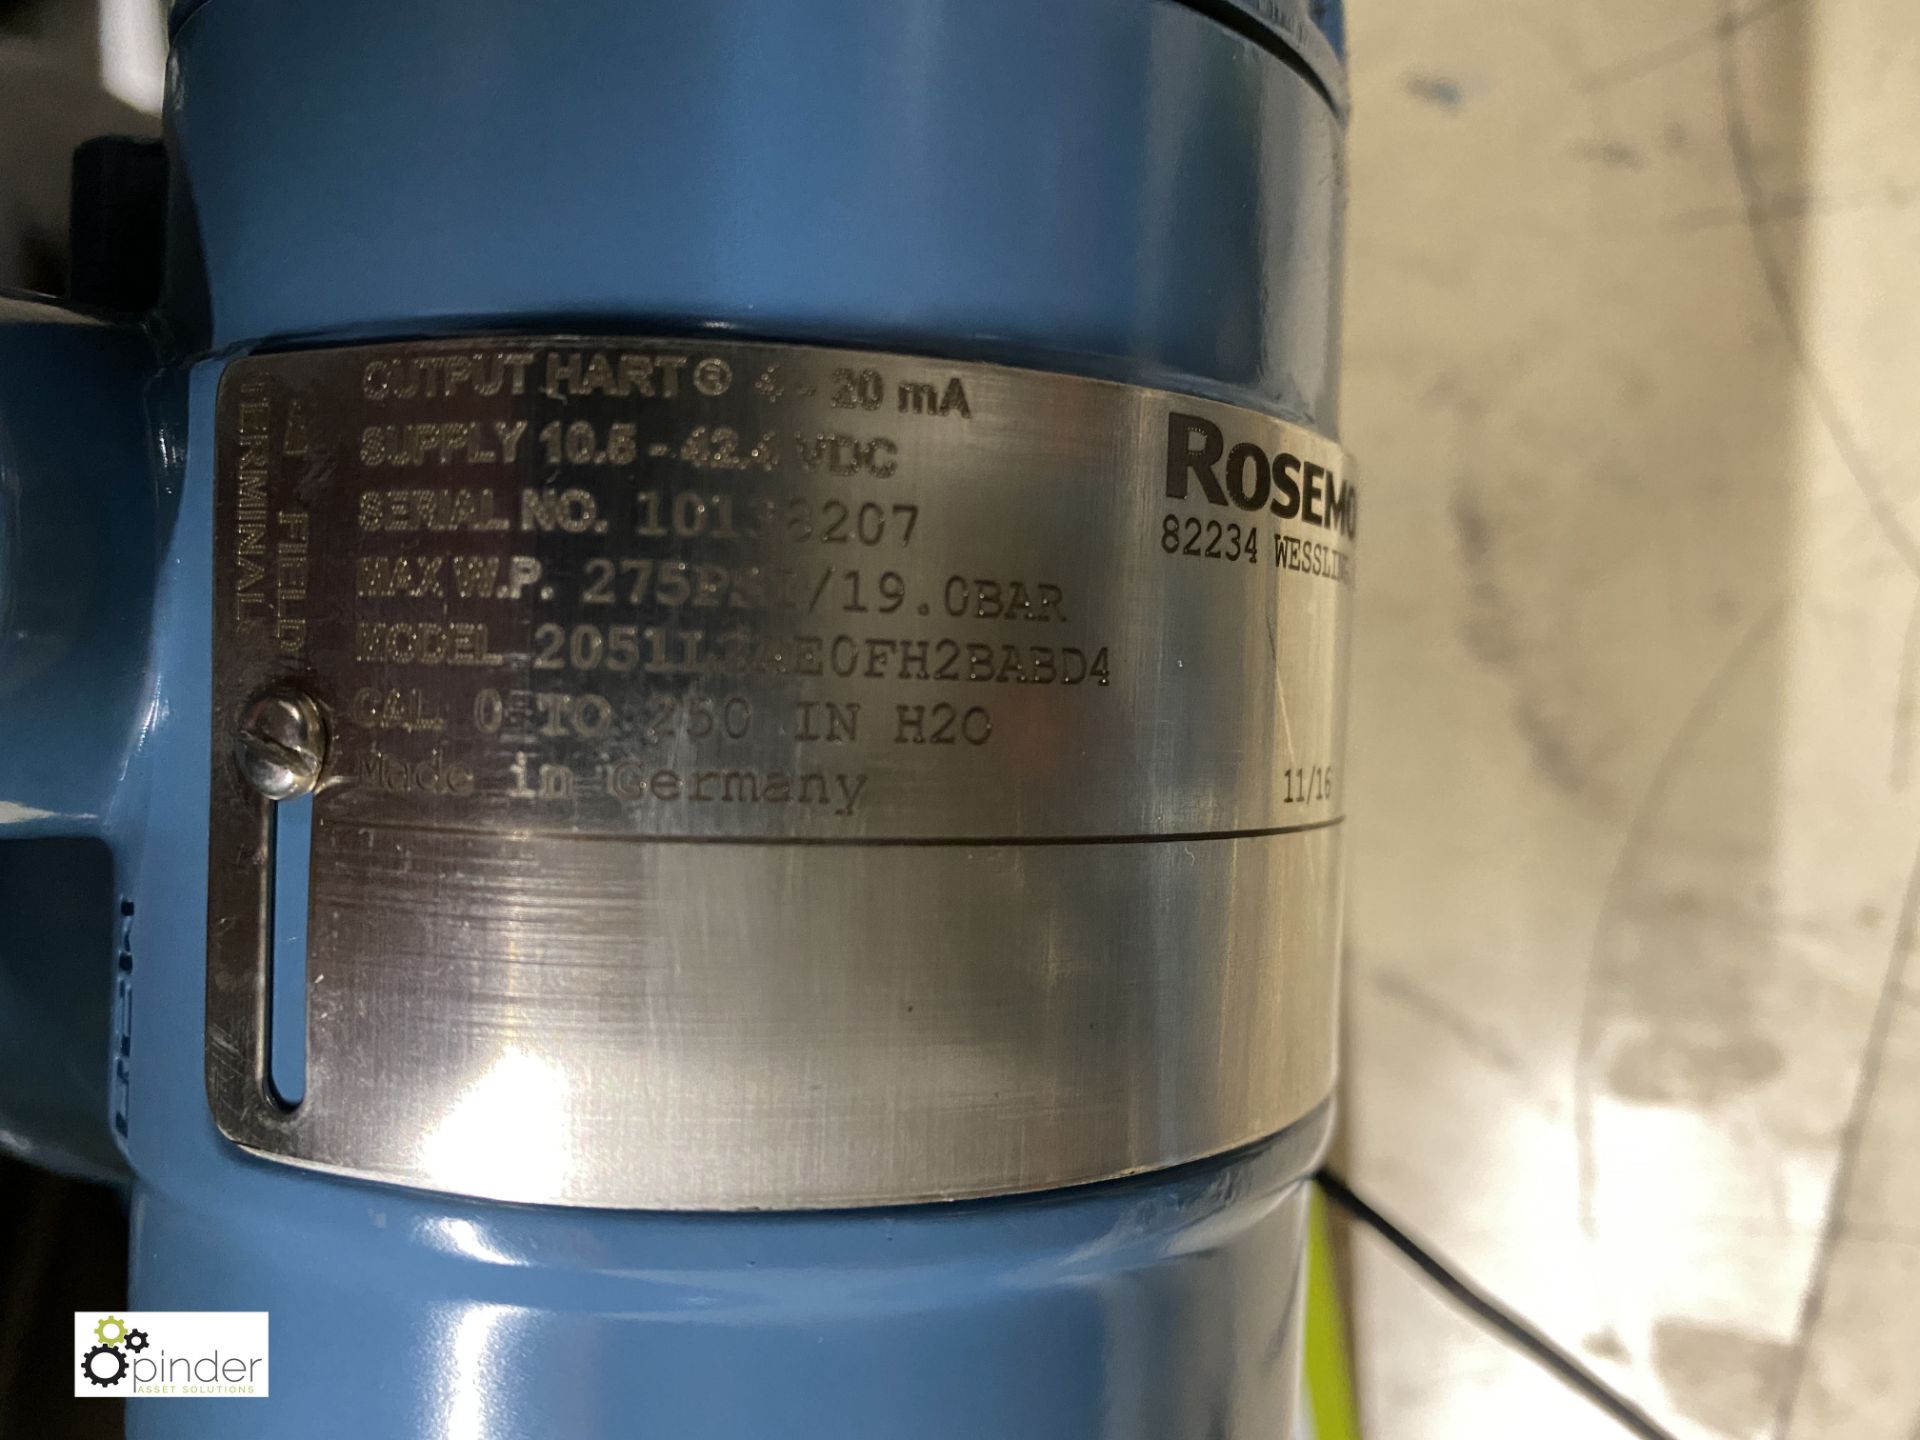 Rosemount Pressure Transmitter 2051L2AE0FH2BABD4, - Image 3 of 4